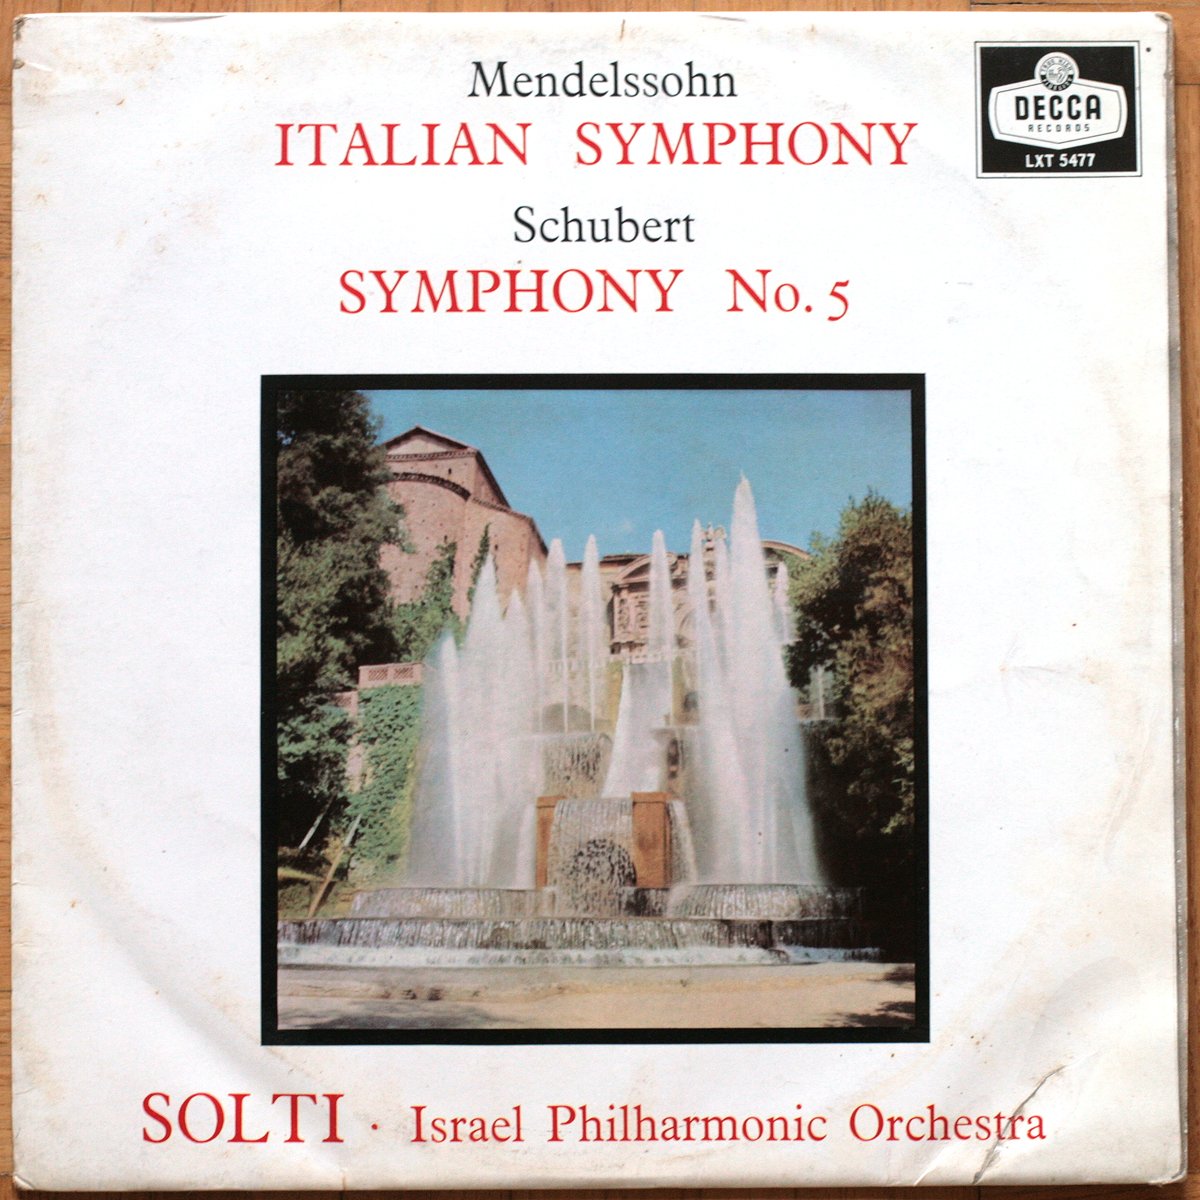 Mendelssohn • Symphonie n° 4 • Schubert • Symphonie n° 5 • LXT 5477 • The Israel Philharmonic Orchestra • Georg Solti